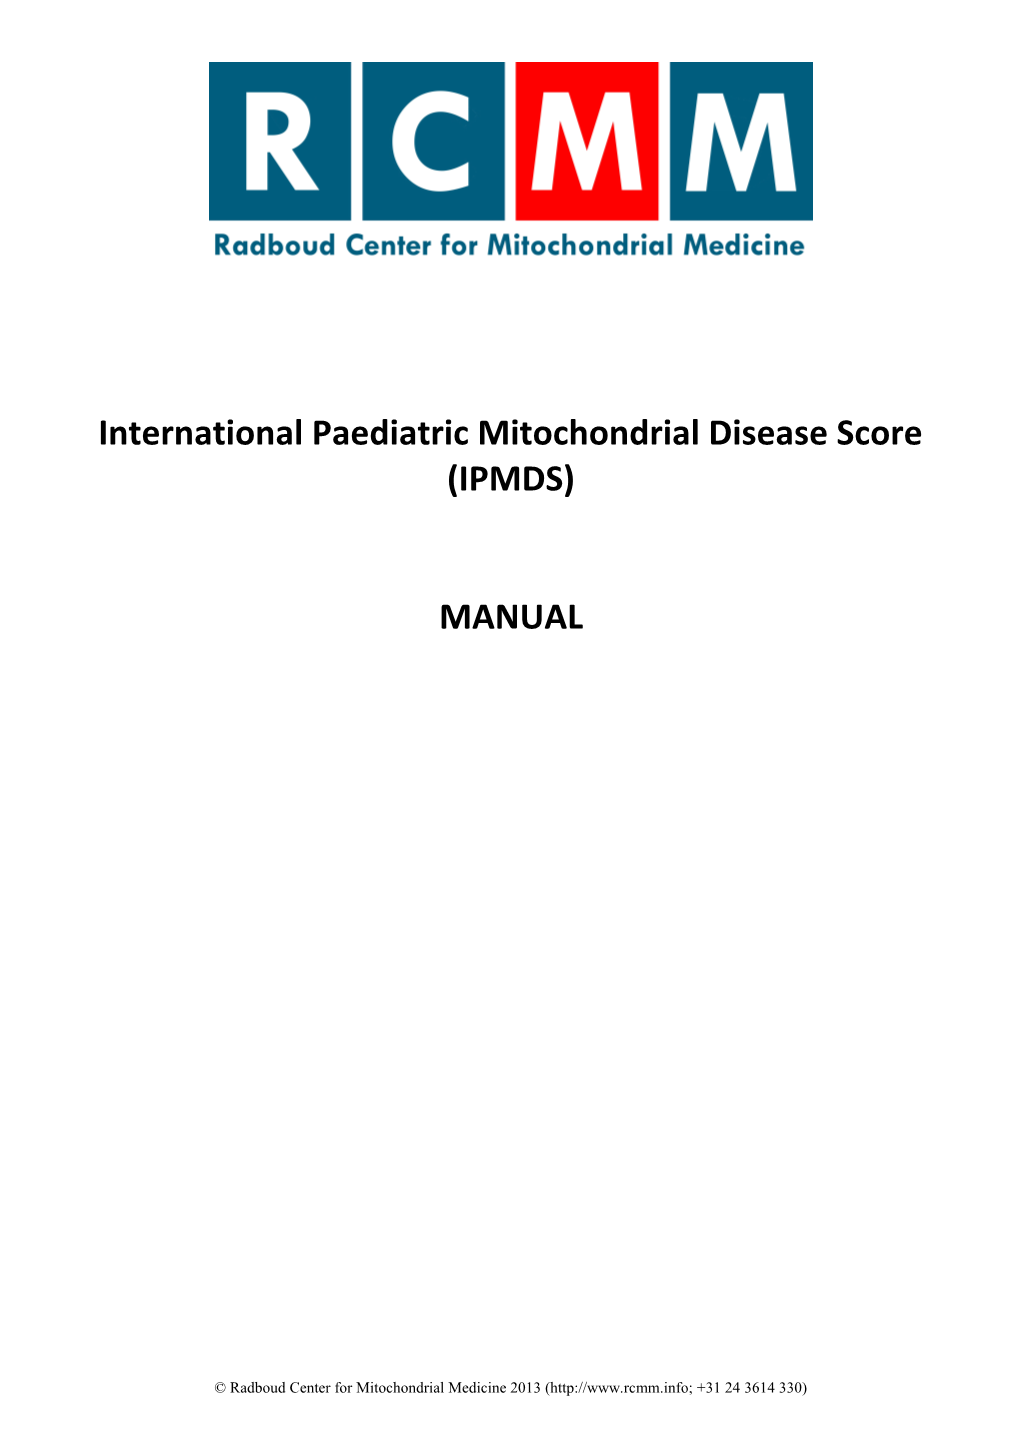 International Paediatric Mitochondrial Disease Score (IPMDS)